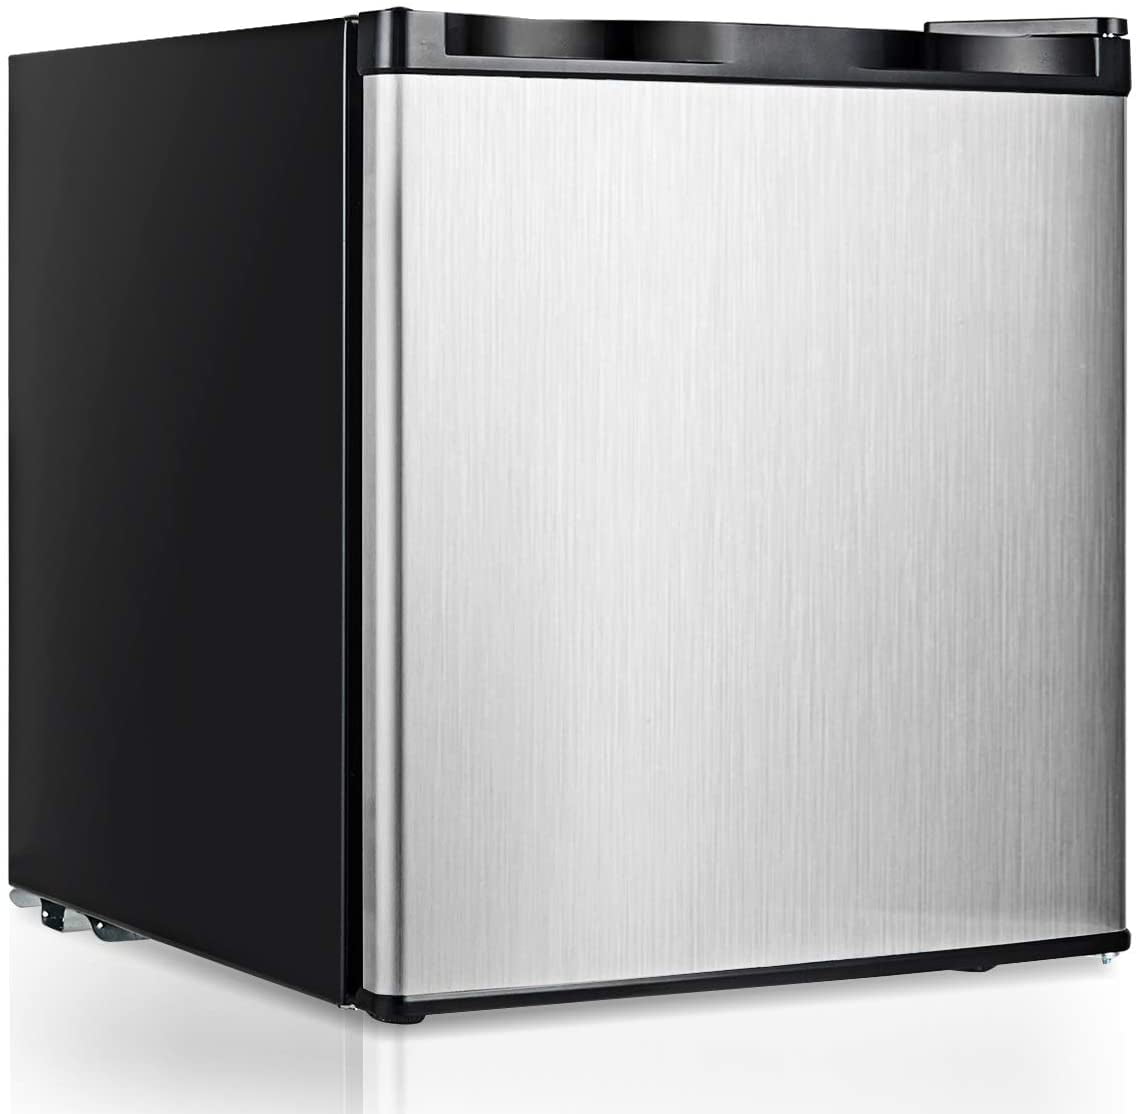 Compact Upright Mini Upright Freezer 31.1L/1.1CU.FT Small refrigerator 